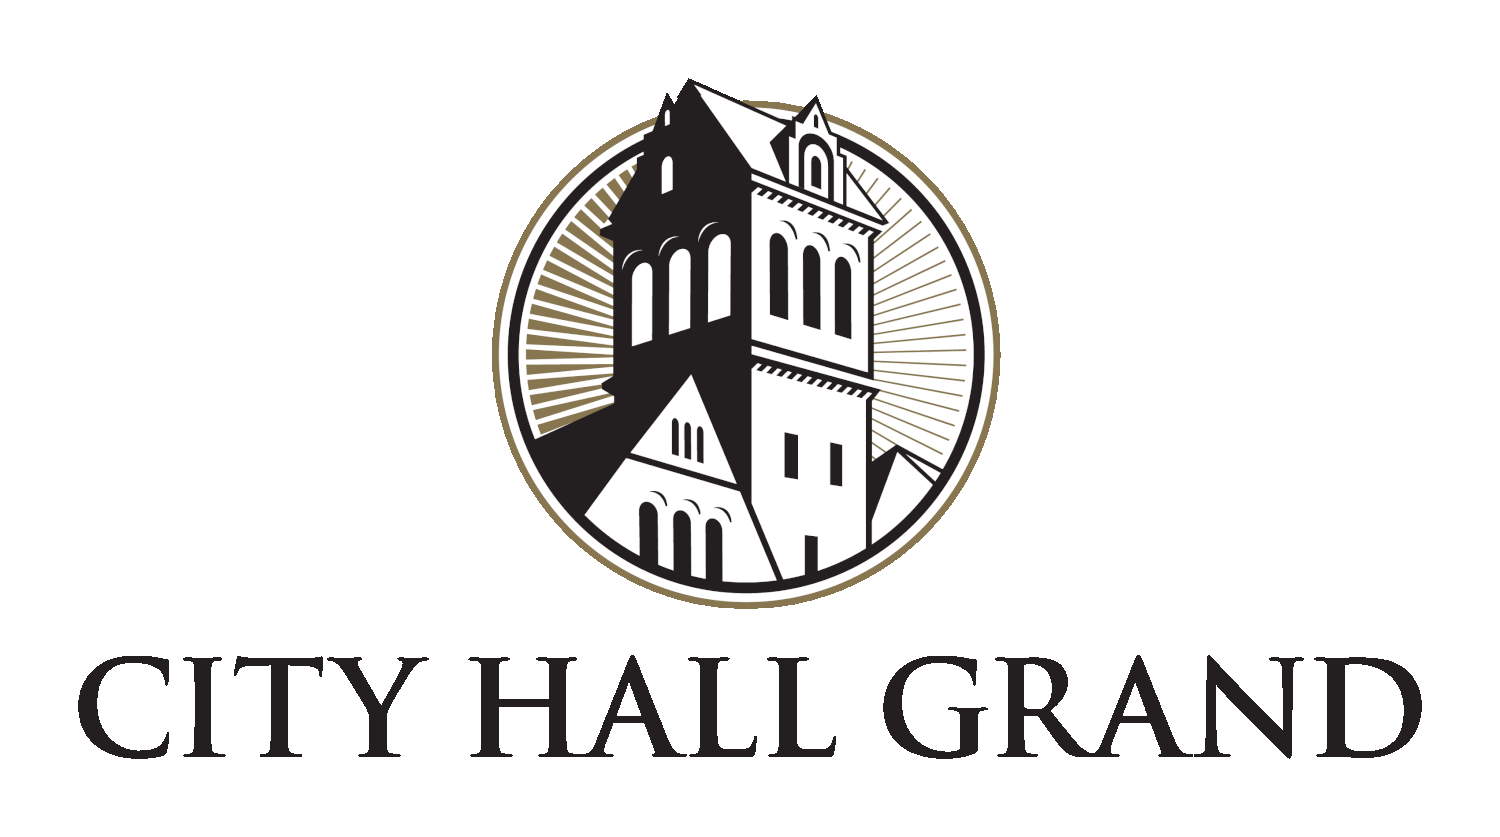 City Hall Logo - City Hall Grand